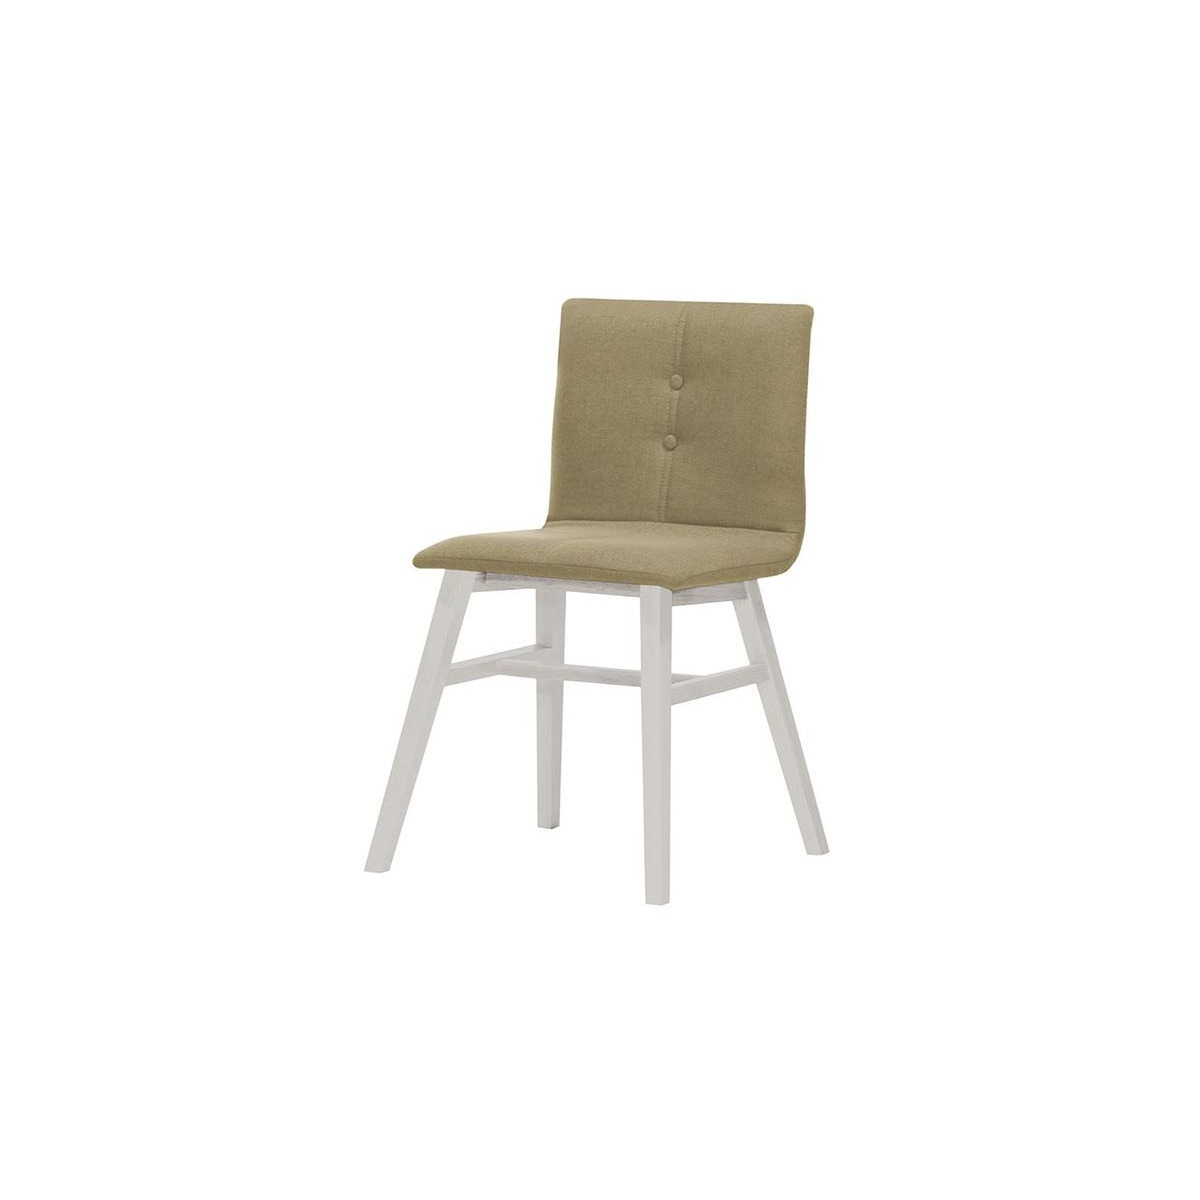 Cod Dining Chair, beige, Leg colour: white - image 1